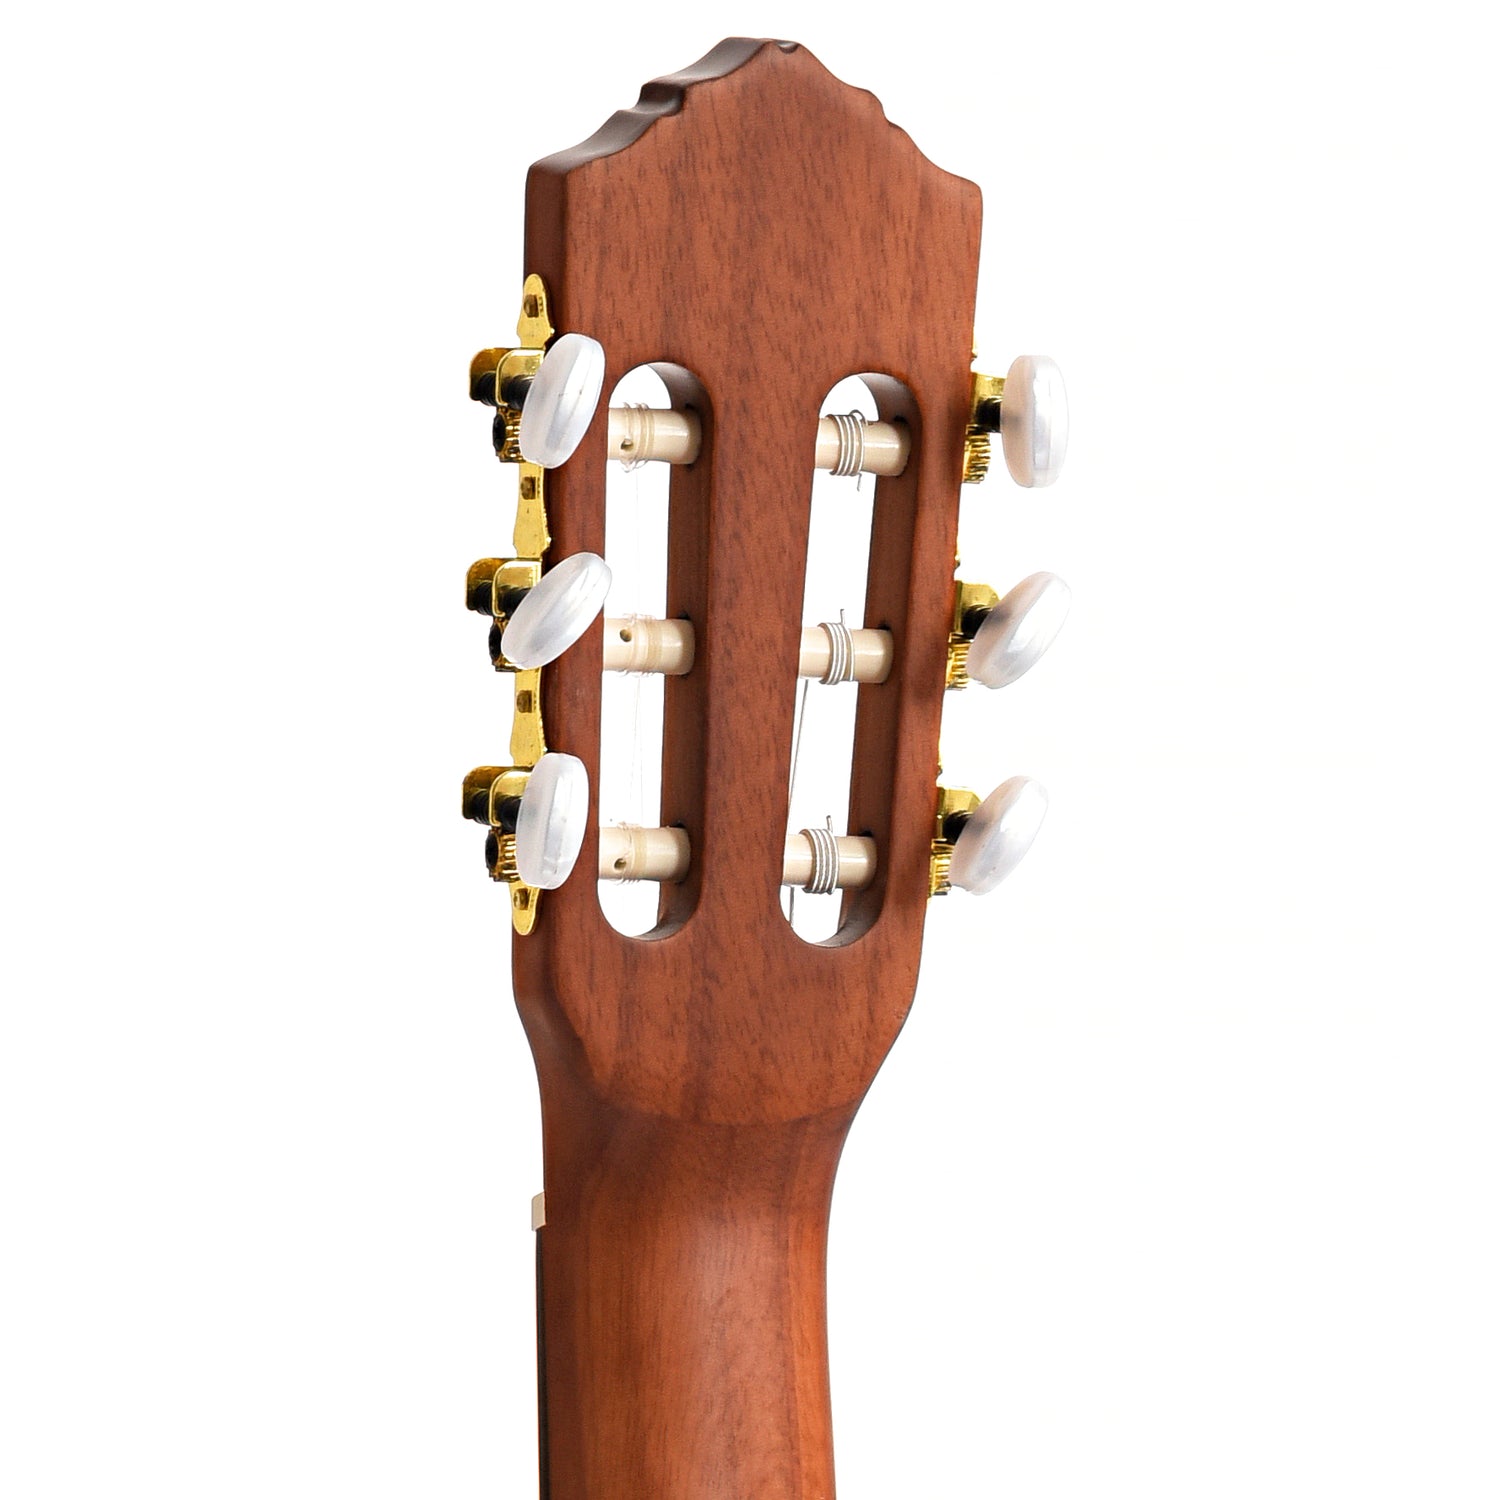 Image 8 of Ortega Family Series Pro R55DLX-BFT Classical Guitar - SKU# R55DLX-BFT : Product Type Classical & Flamenco Guitars : Elderly Instruments